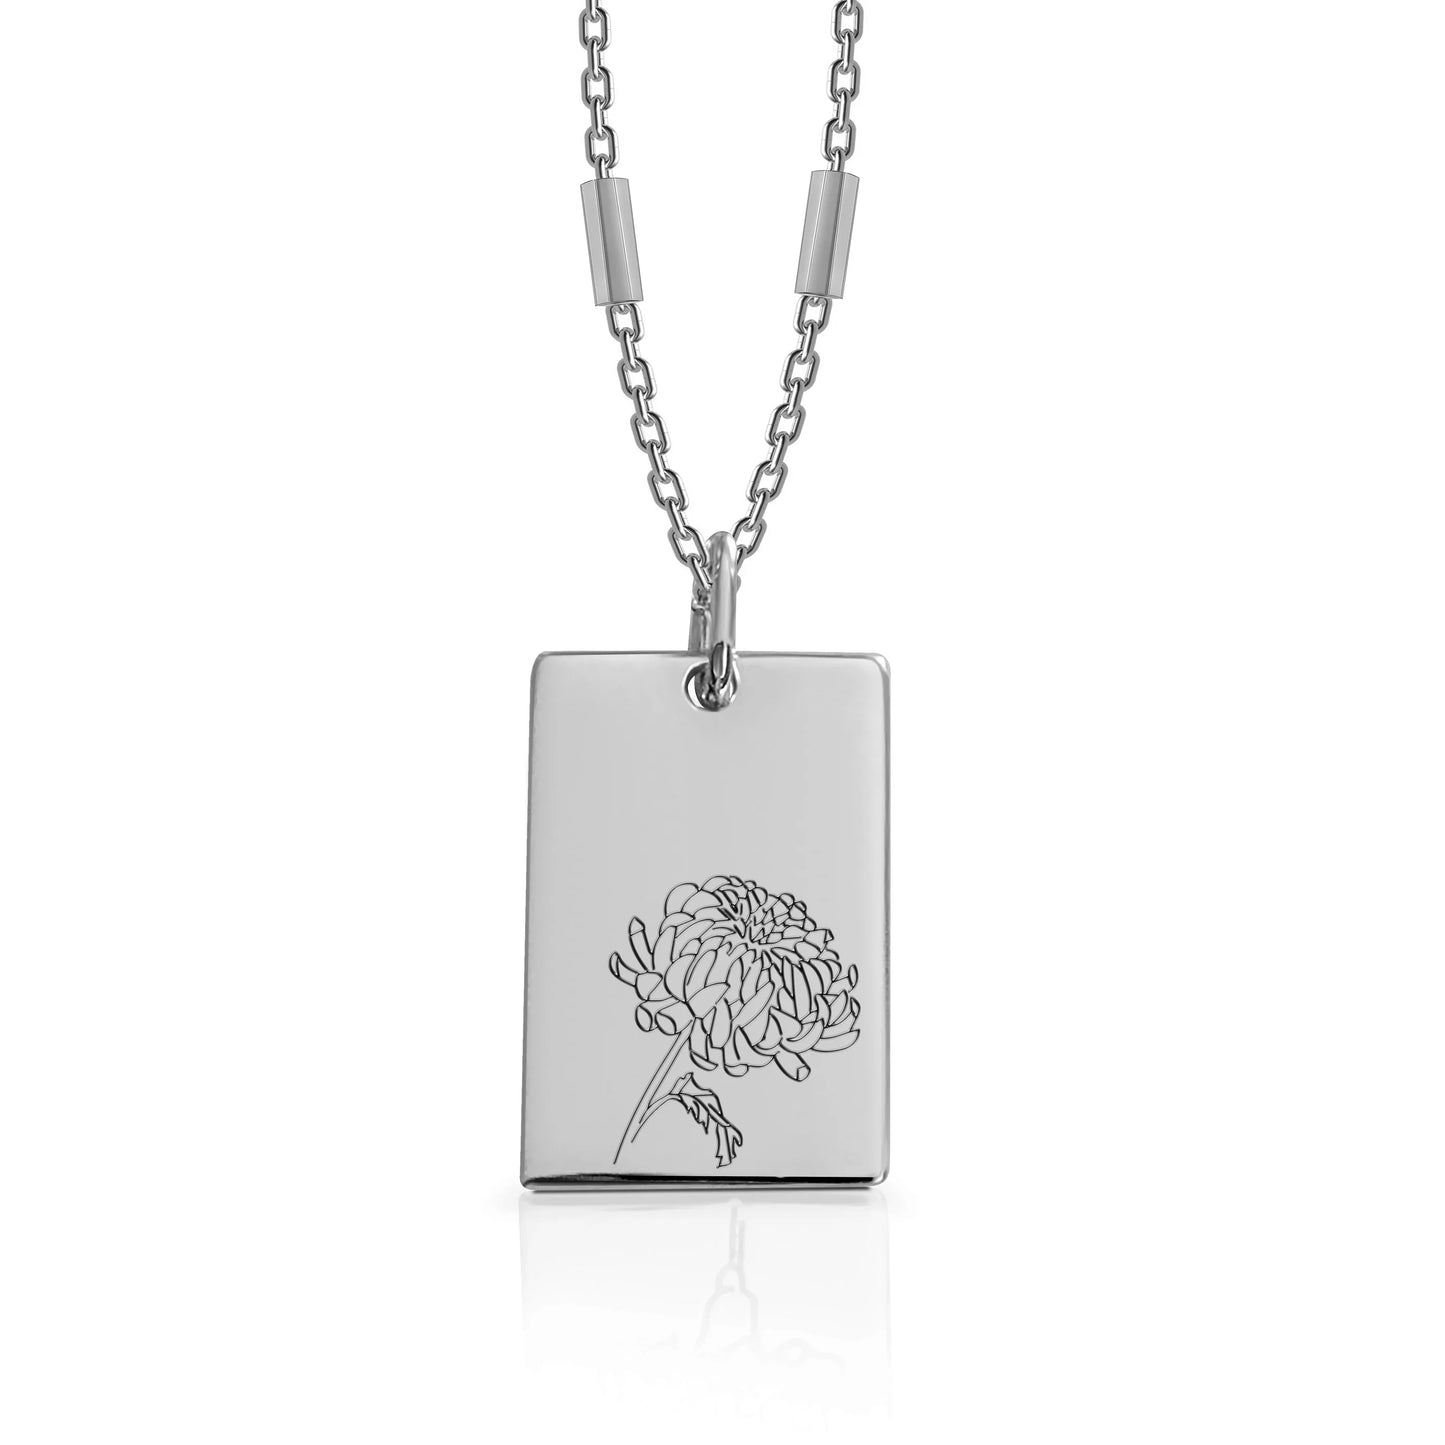 Birth Flower Necklace - Sterling Silver